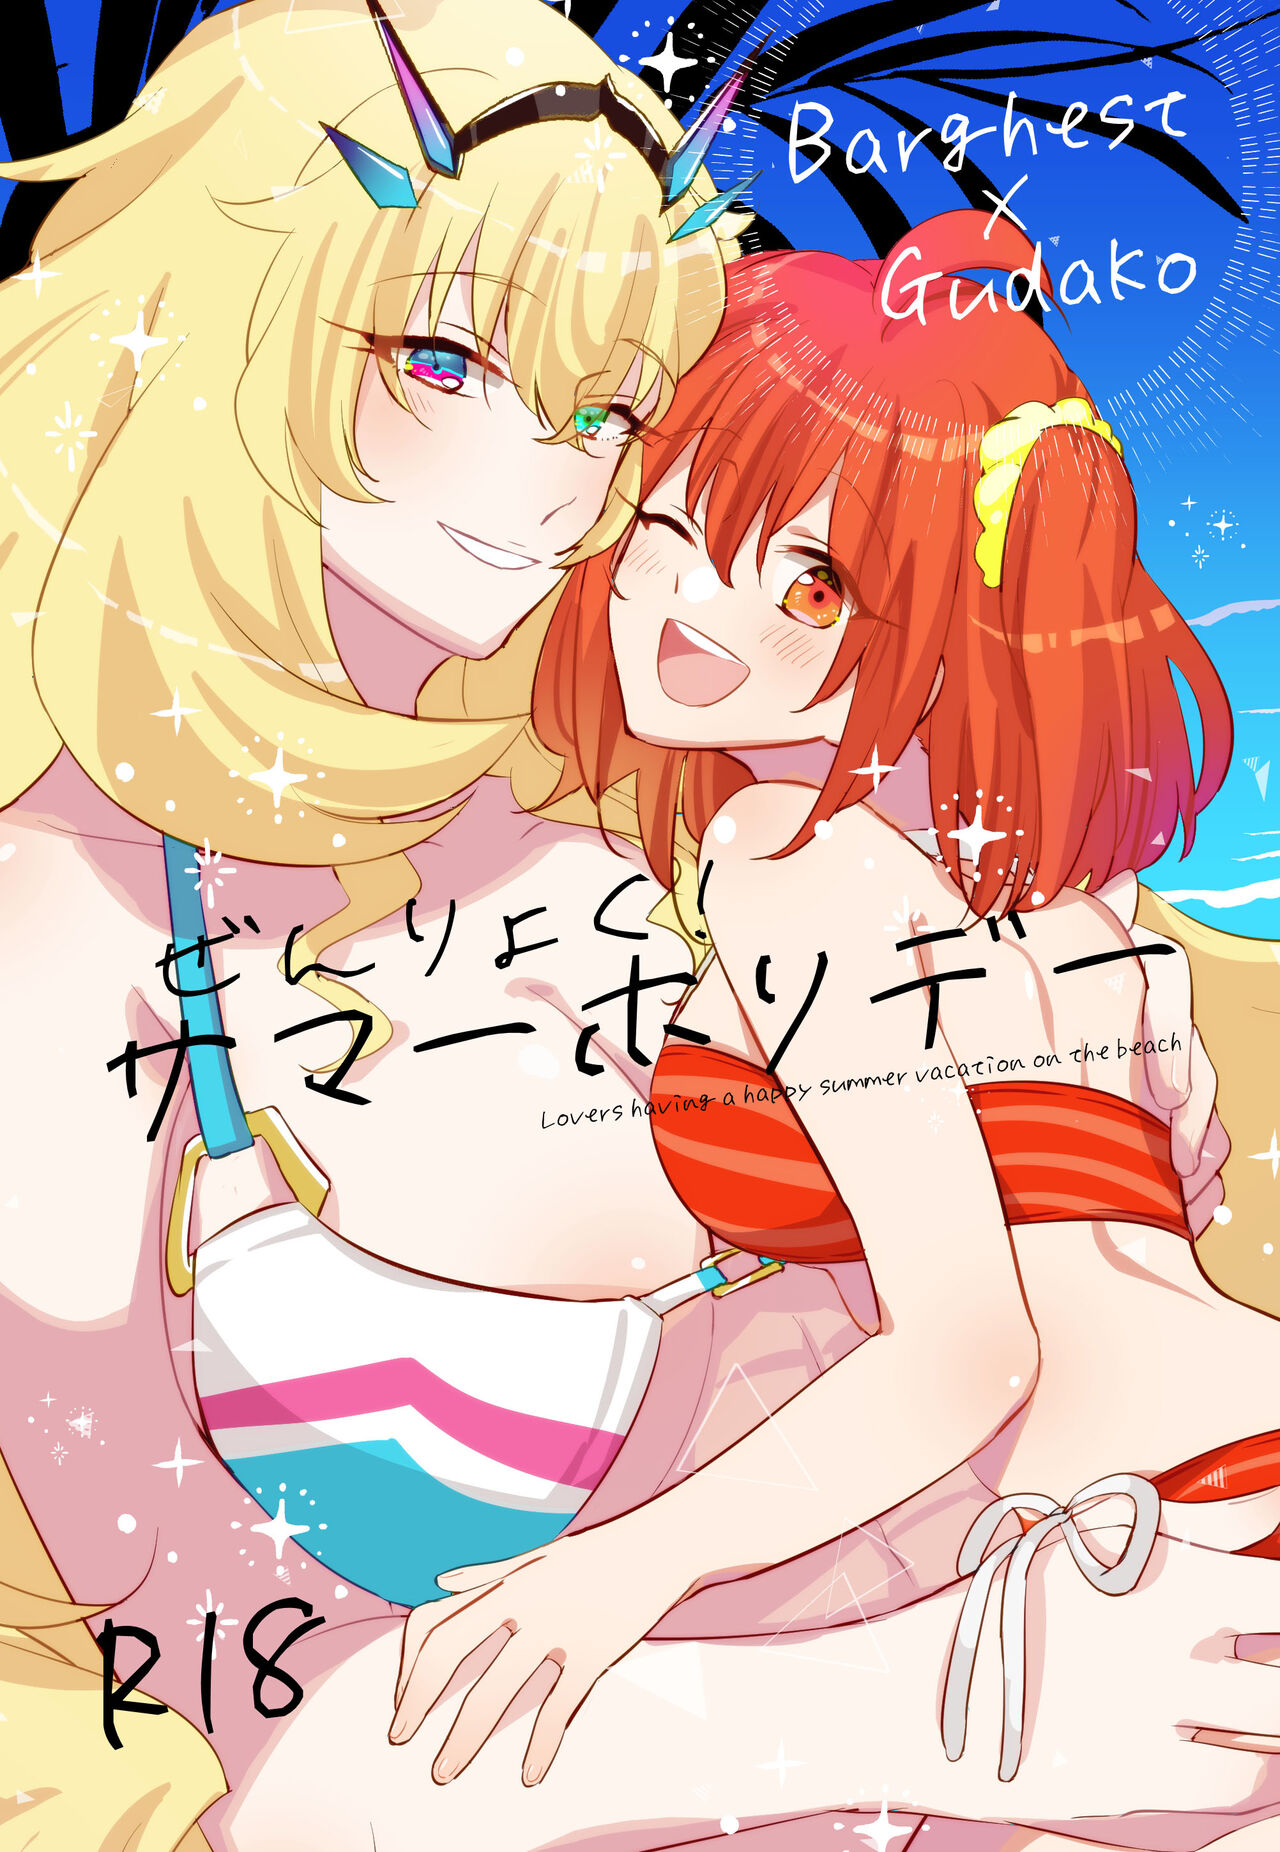 Zenryoku! Summer Holiday – Lovers having a happy summer vacation on the beach